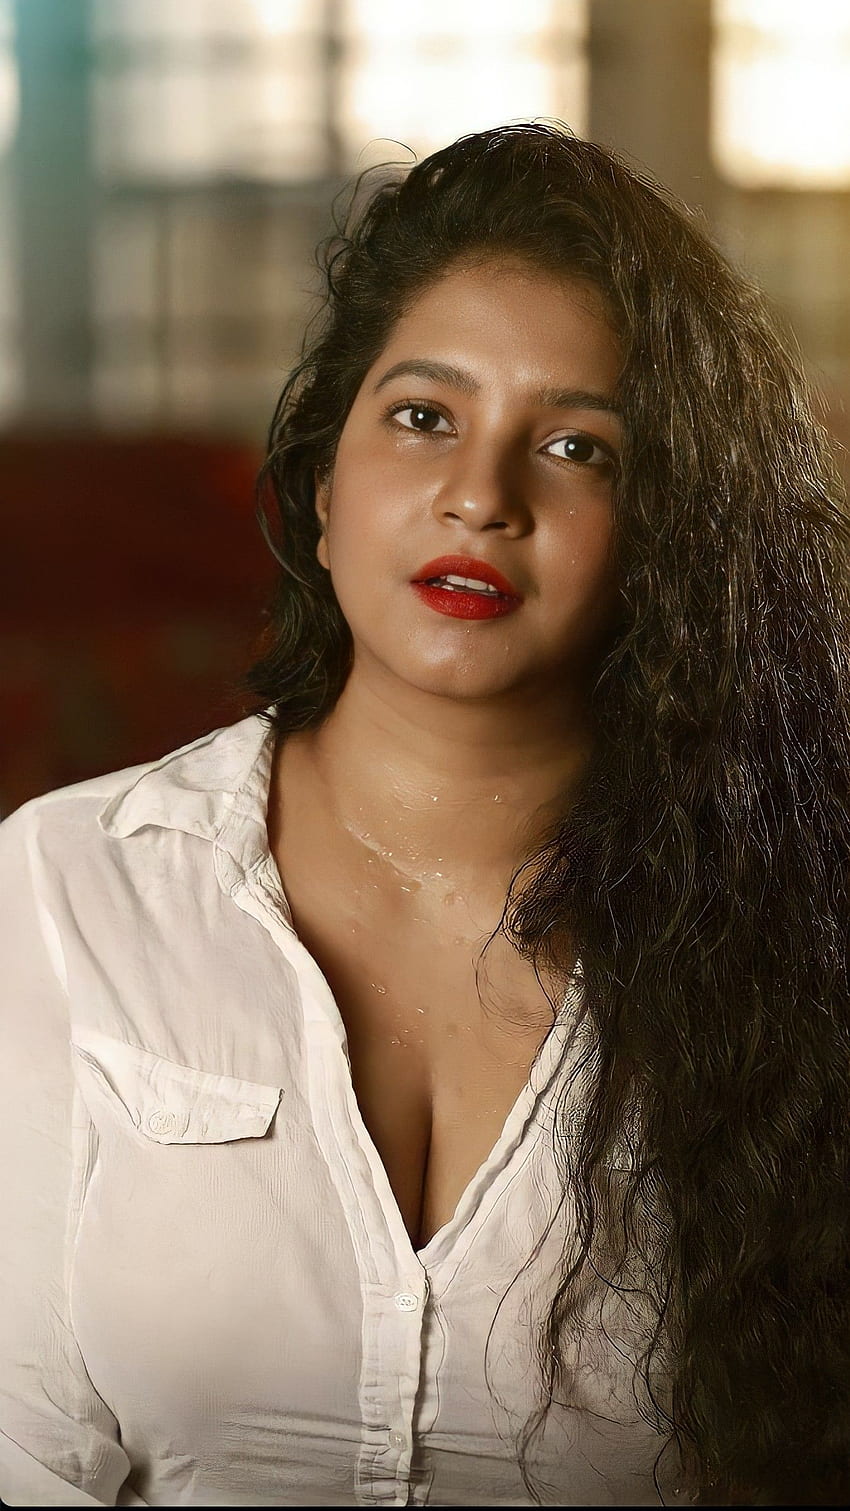 Shubha punja, aktris kannada wallpaper ponsel HD